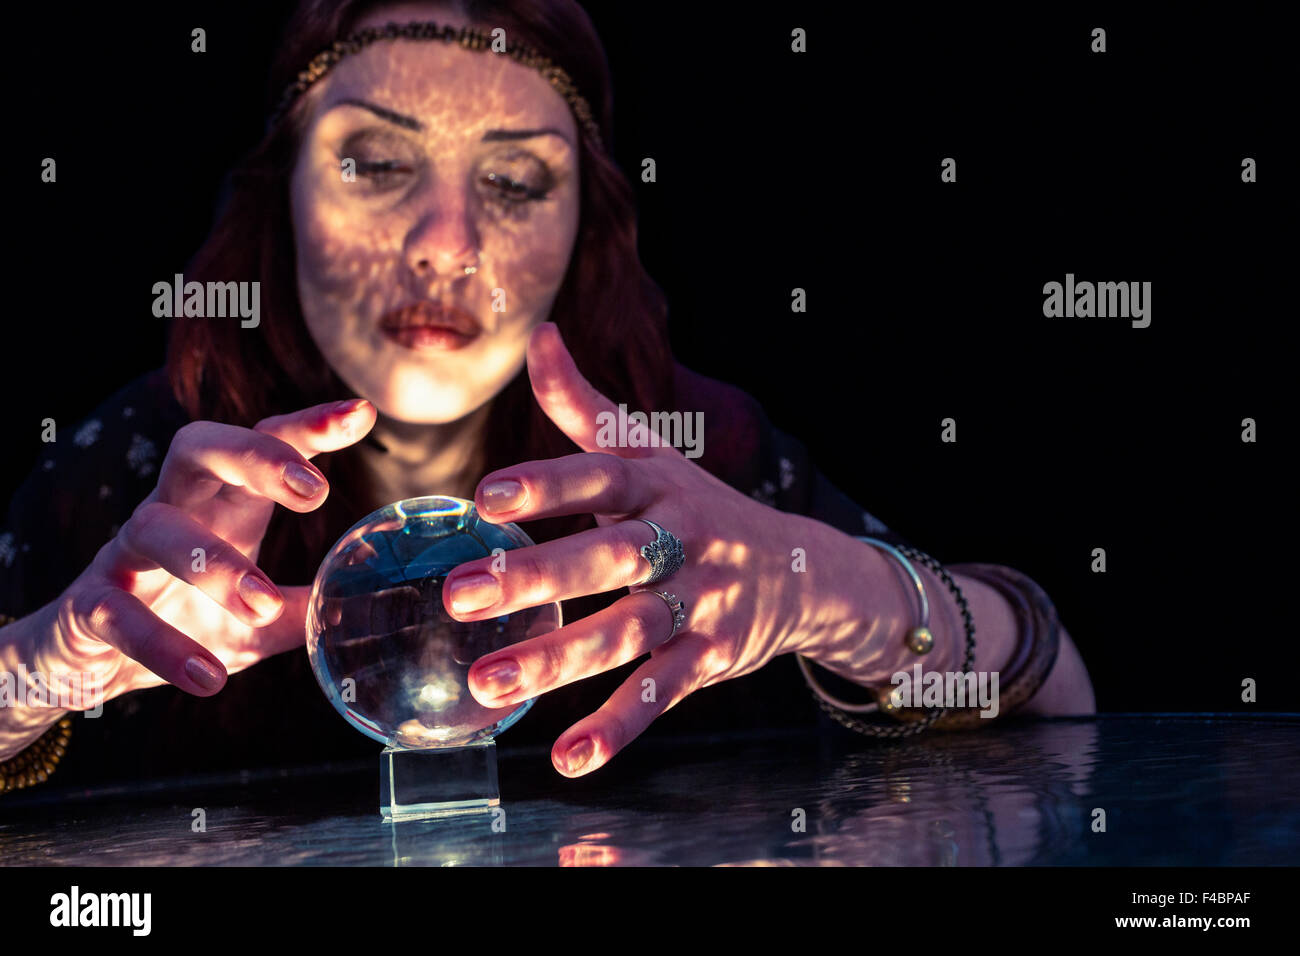 Adivina con bola de cristal fotografías e imágenes de alta resolución -  Alamy